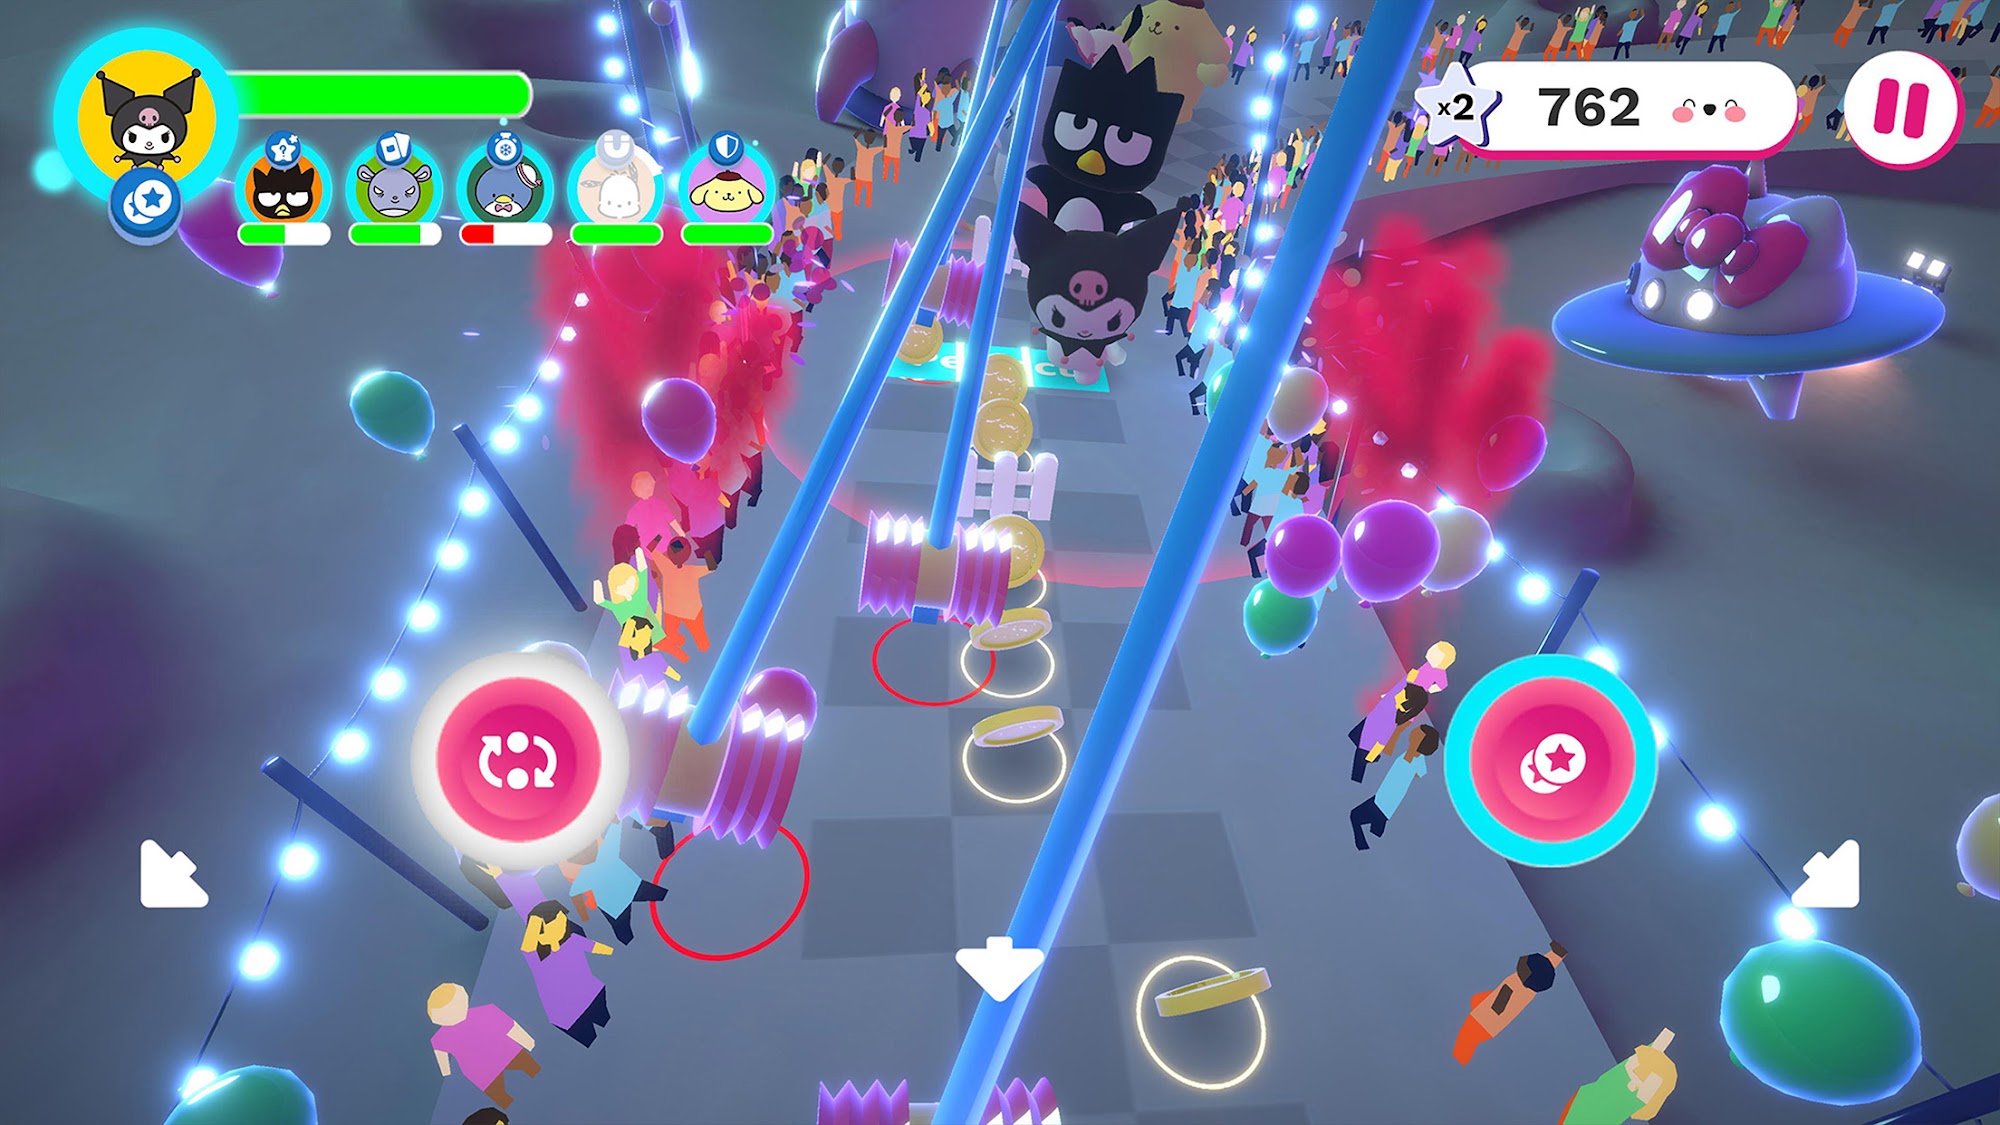 HELLO KITTY HAPPINESS PARADE - Android game screenshots.